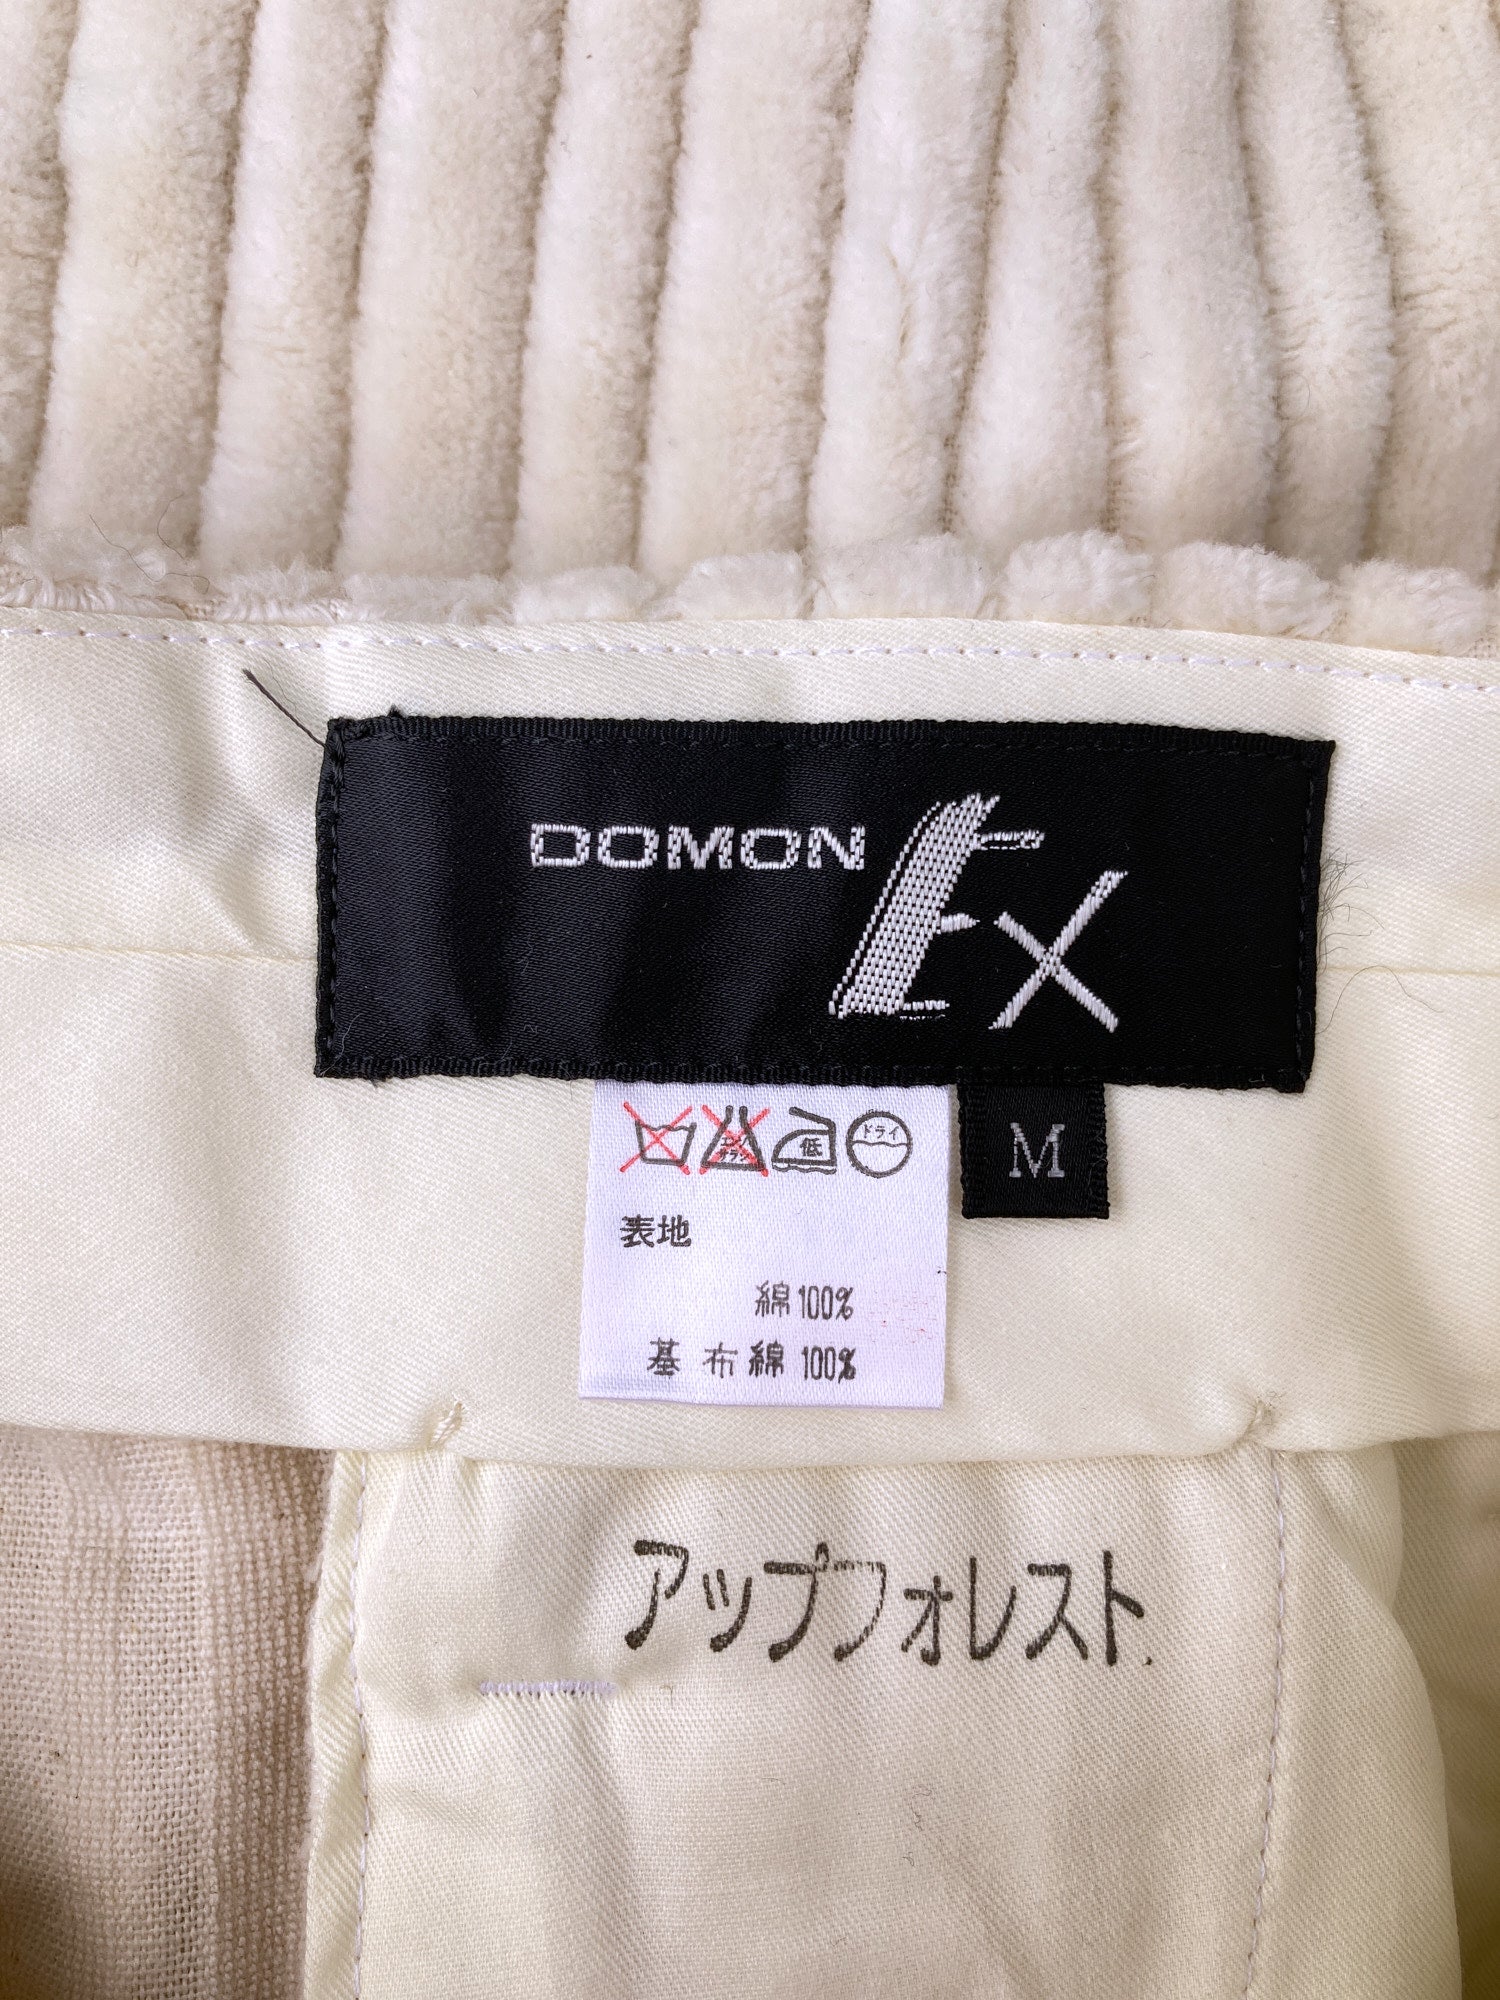 Domon cream cotton wide wale corduroy trousers - M S